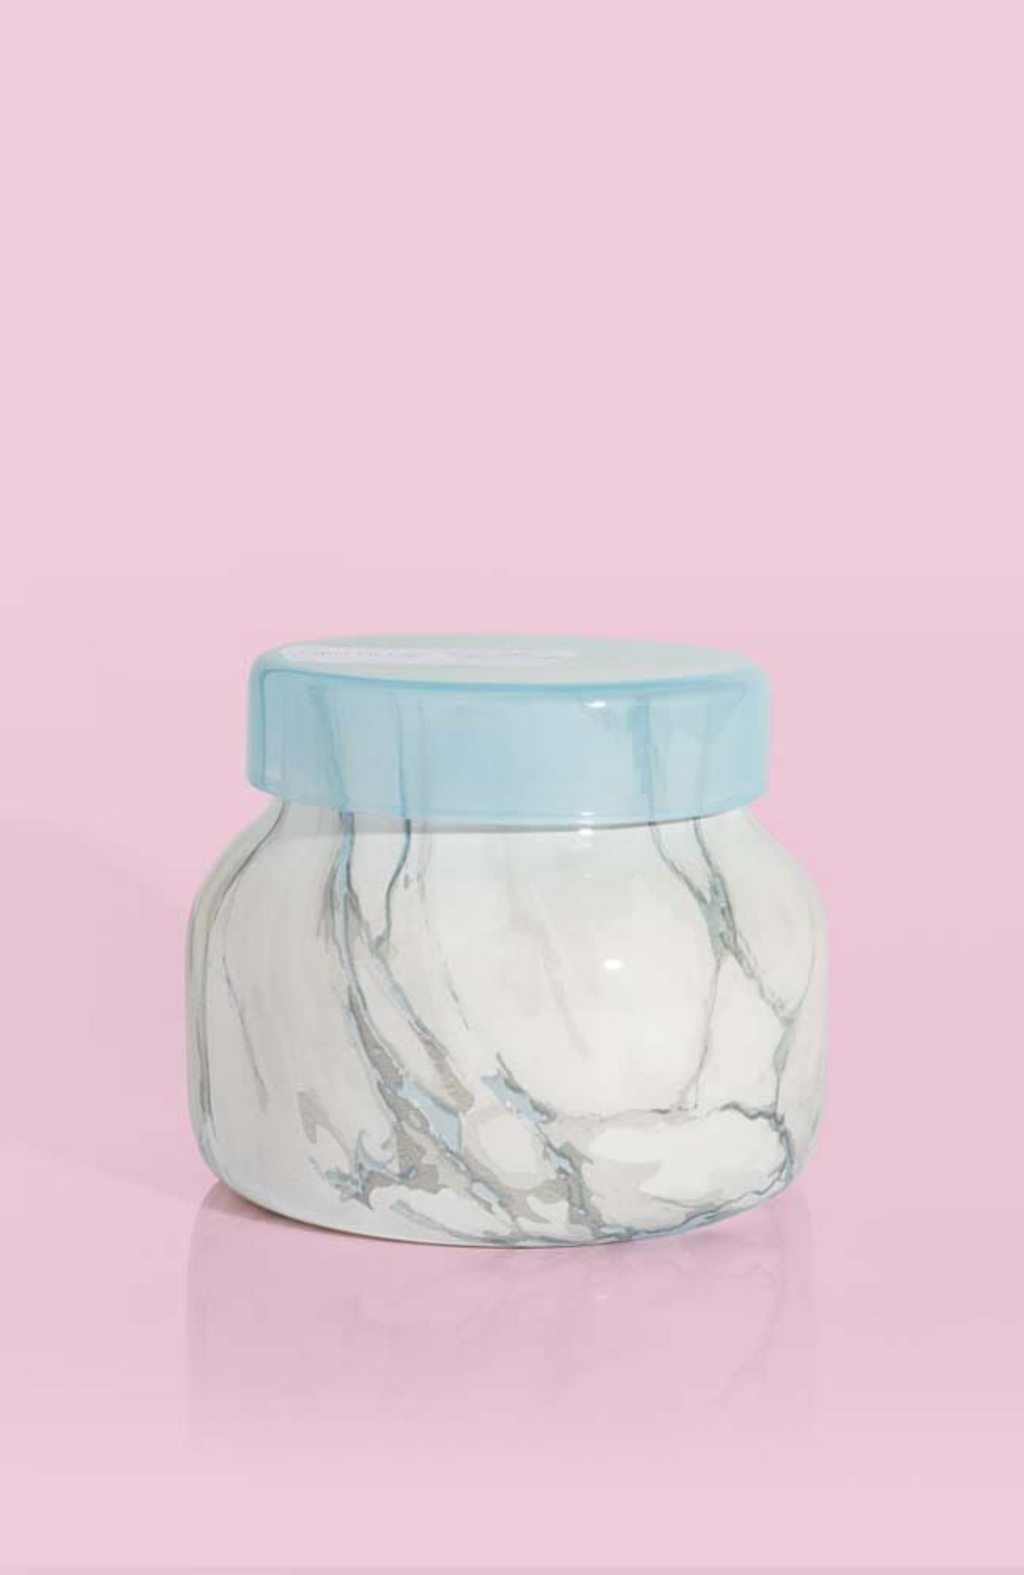 Capri Blue - Blue Jean Modern Marble Petite Jar, 8oz